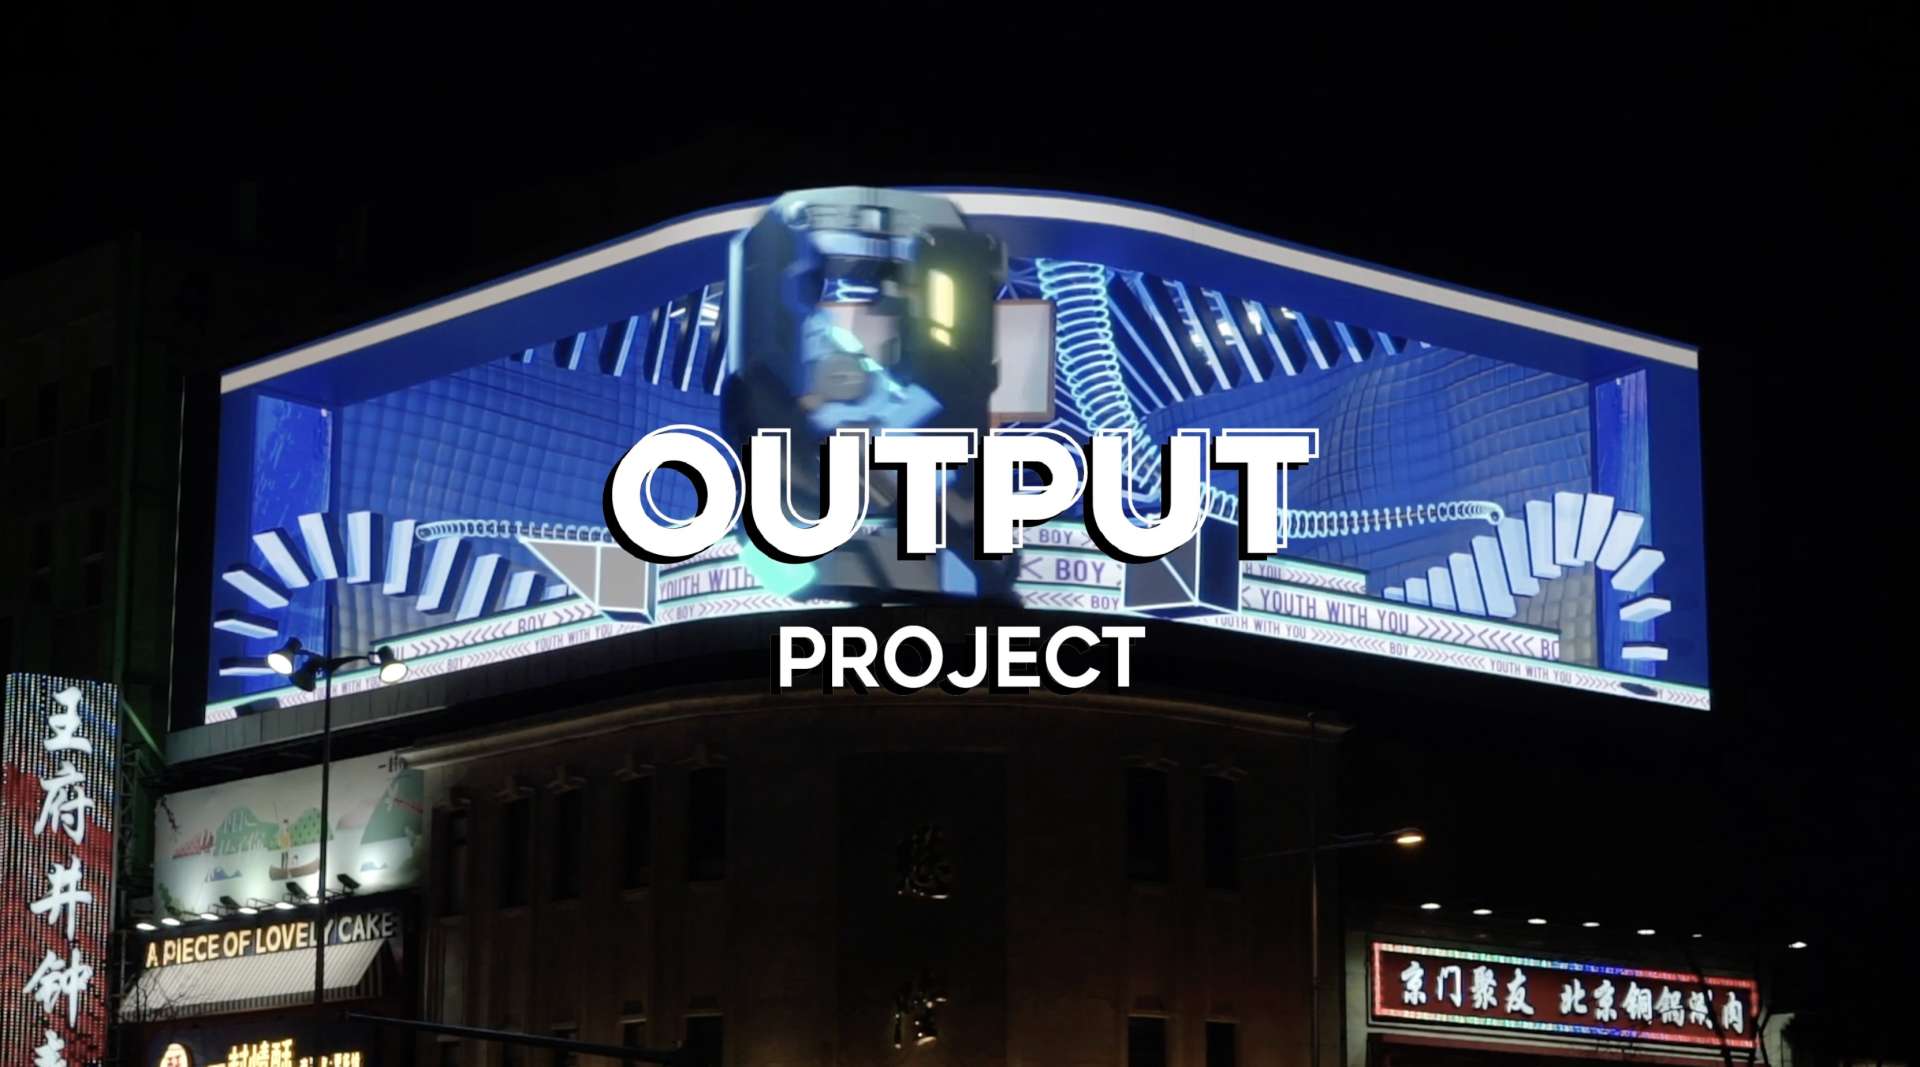 OUTPUT应爱奇艺《青春有你3》邀请，创作超酷裸眼3D户外视频